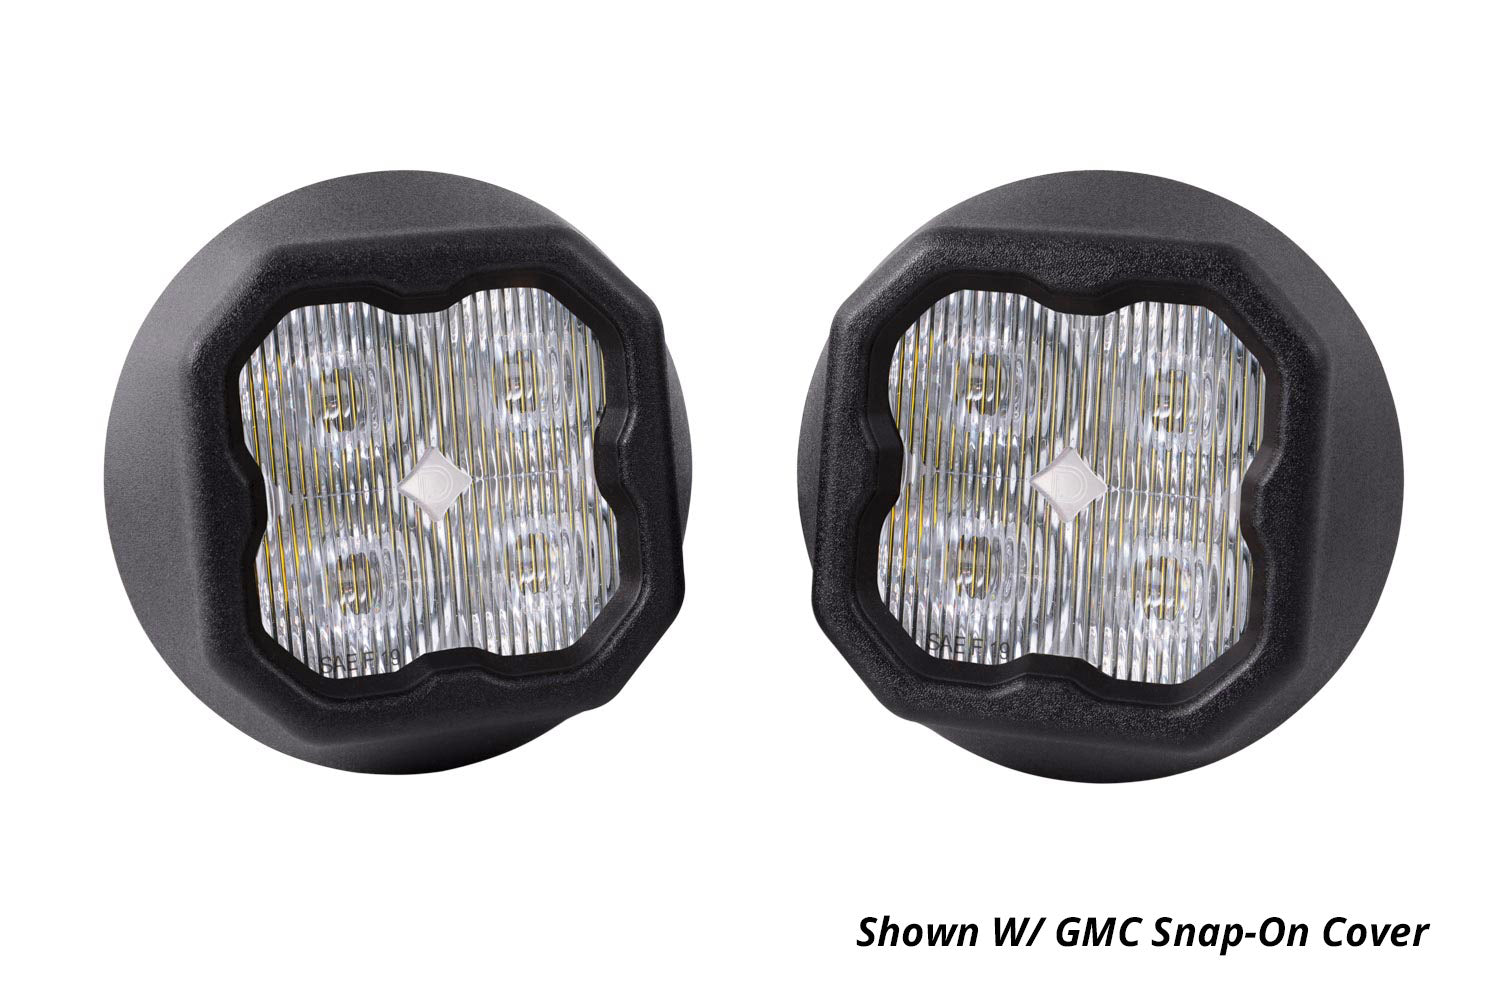 SS3 LED Fog Light Kit for 2007-2013 Chevrolet Avalanche Yellow SAE Fog Max w/ Backlight Diode Dynamics